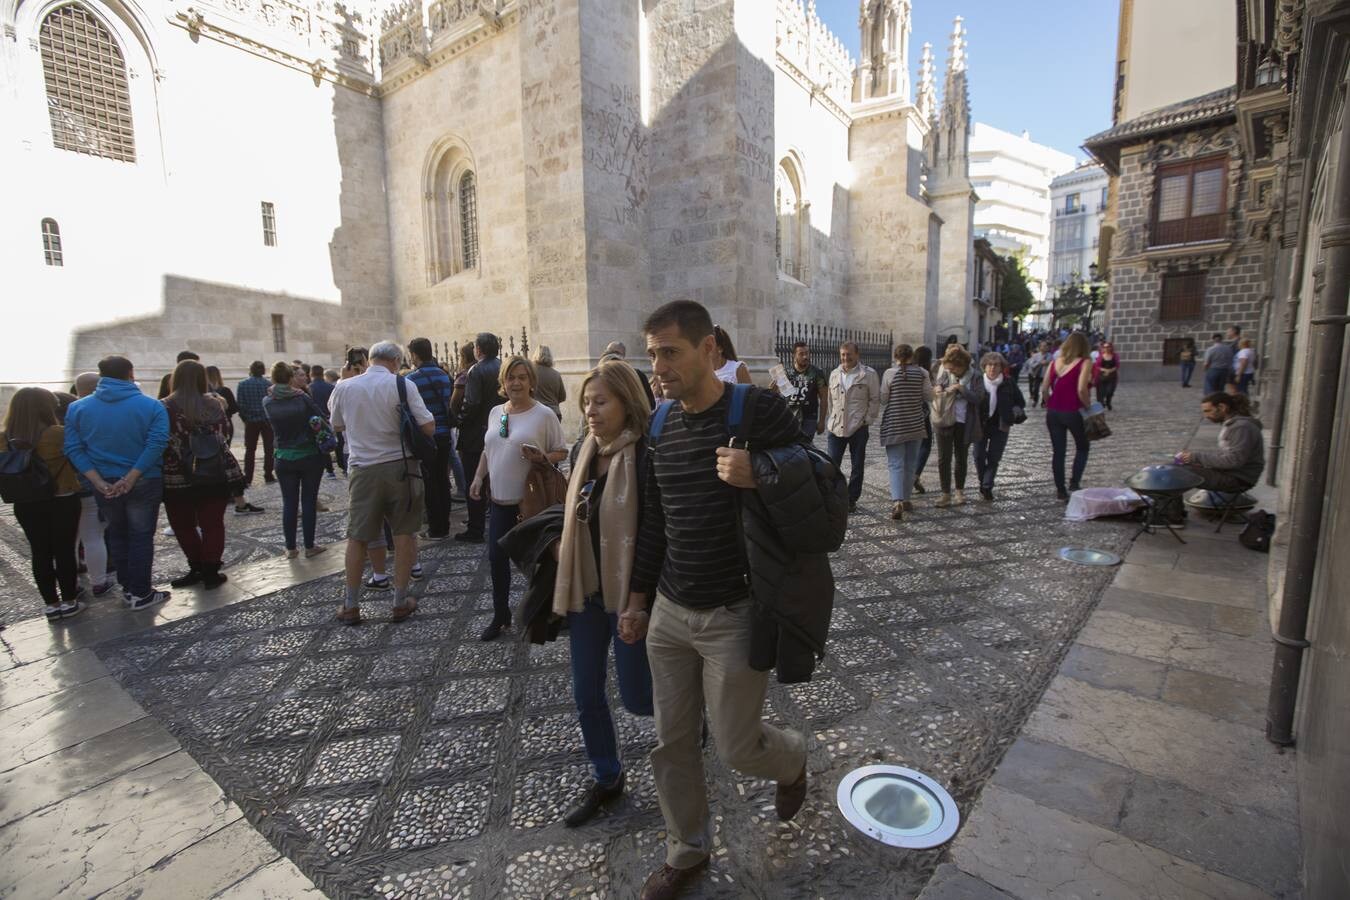 Mlles de visitantes llenan las calles de Granada